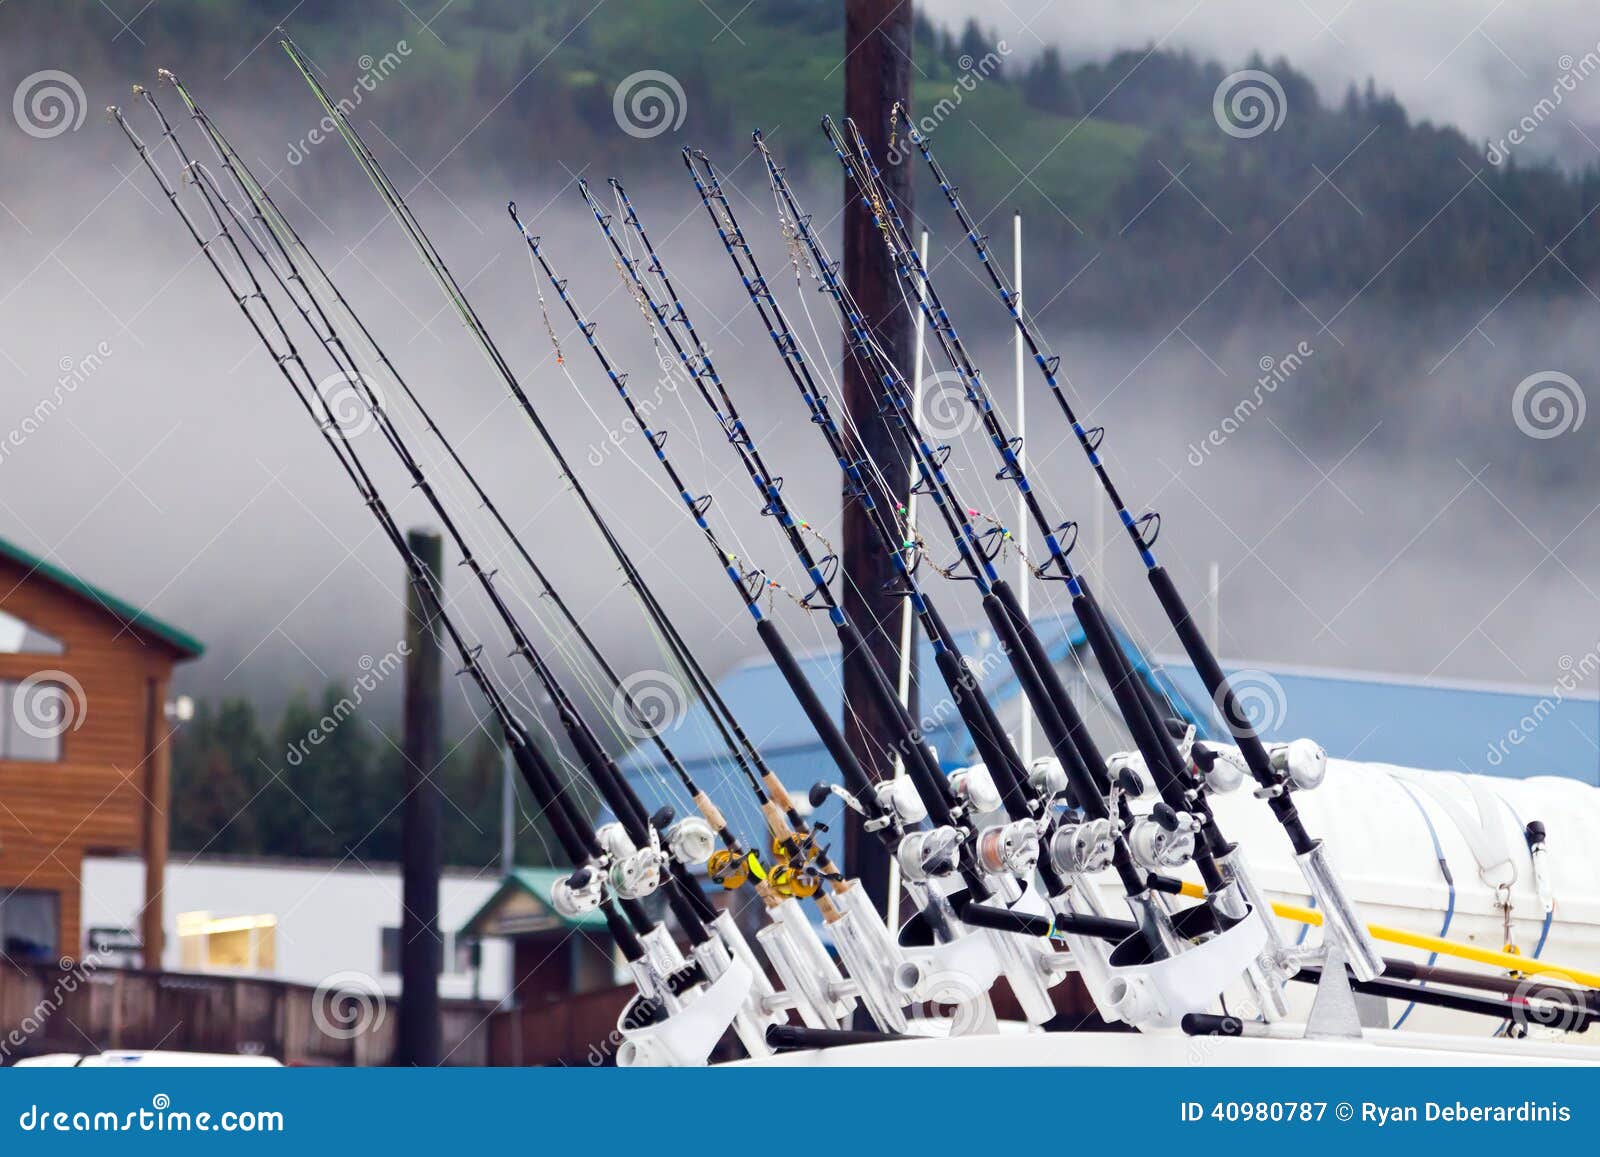 1,761 Sea Fishing Poles Stock Photos - Free & Royalty-Free Stock